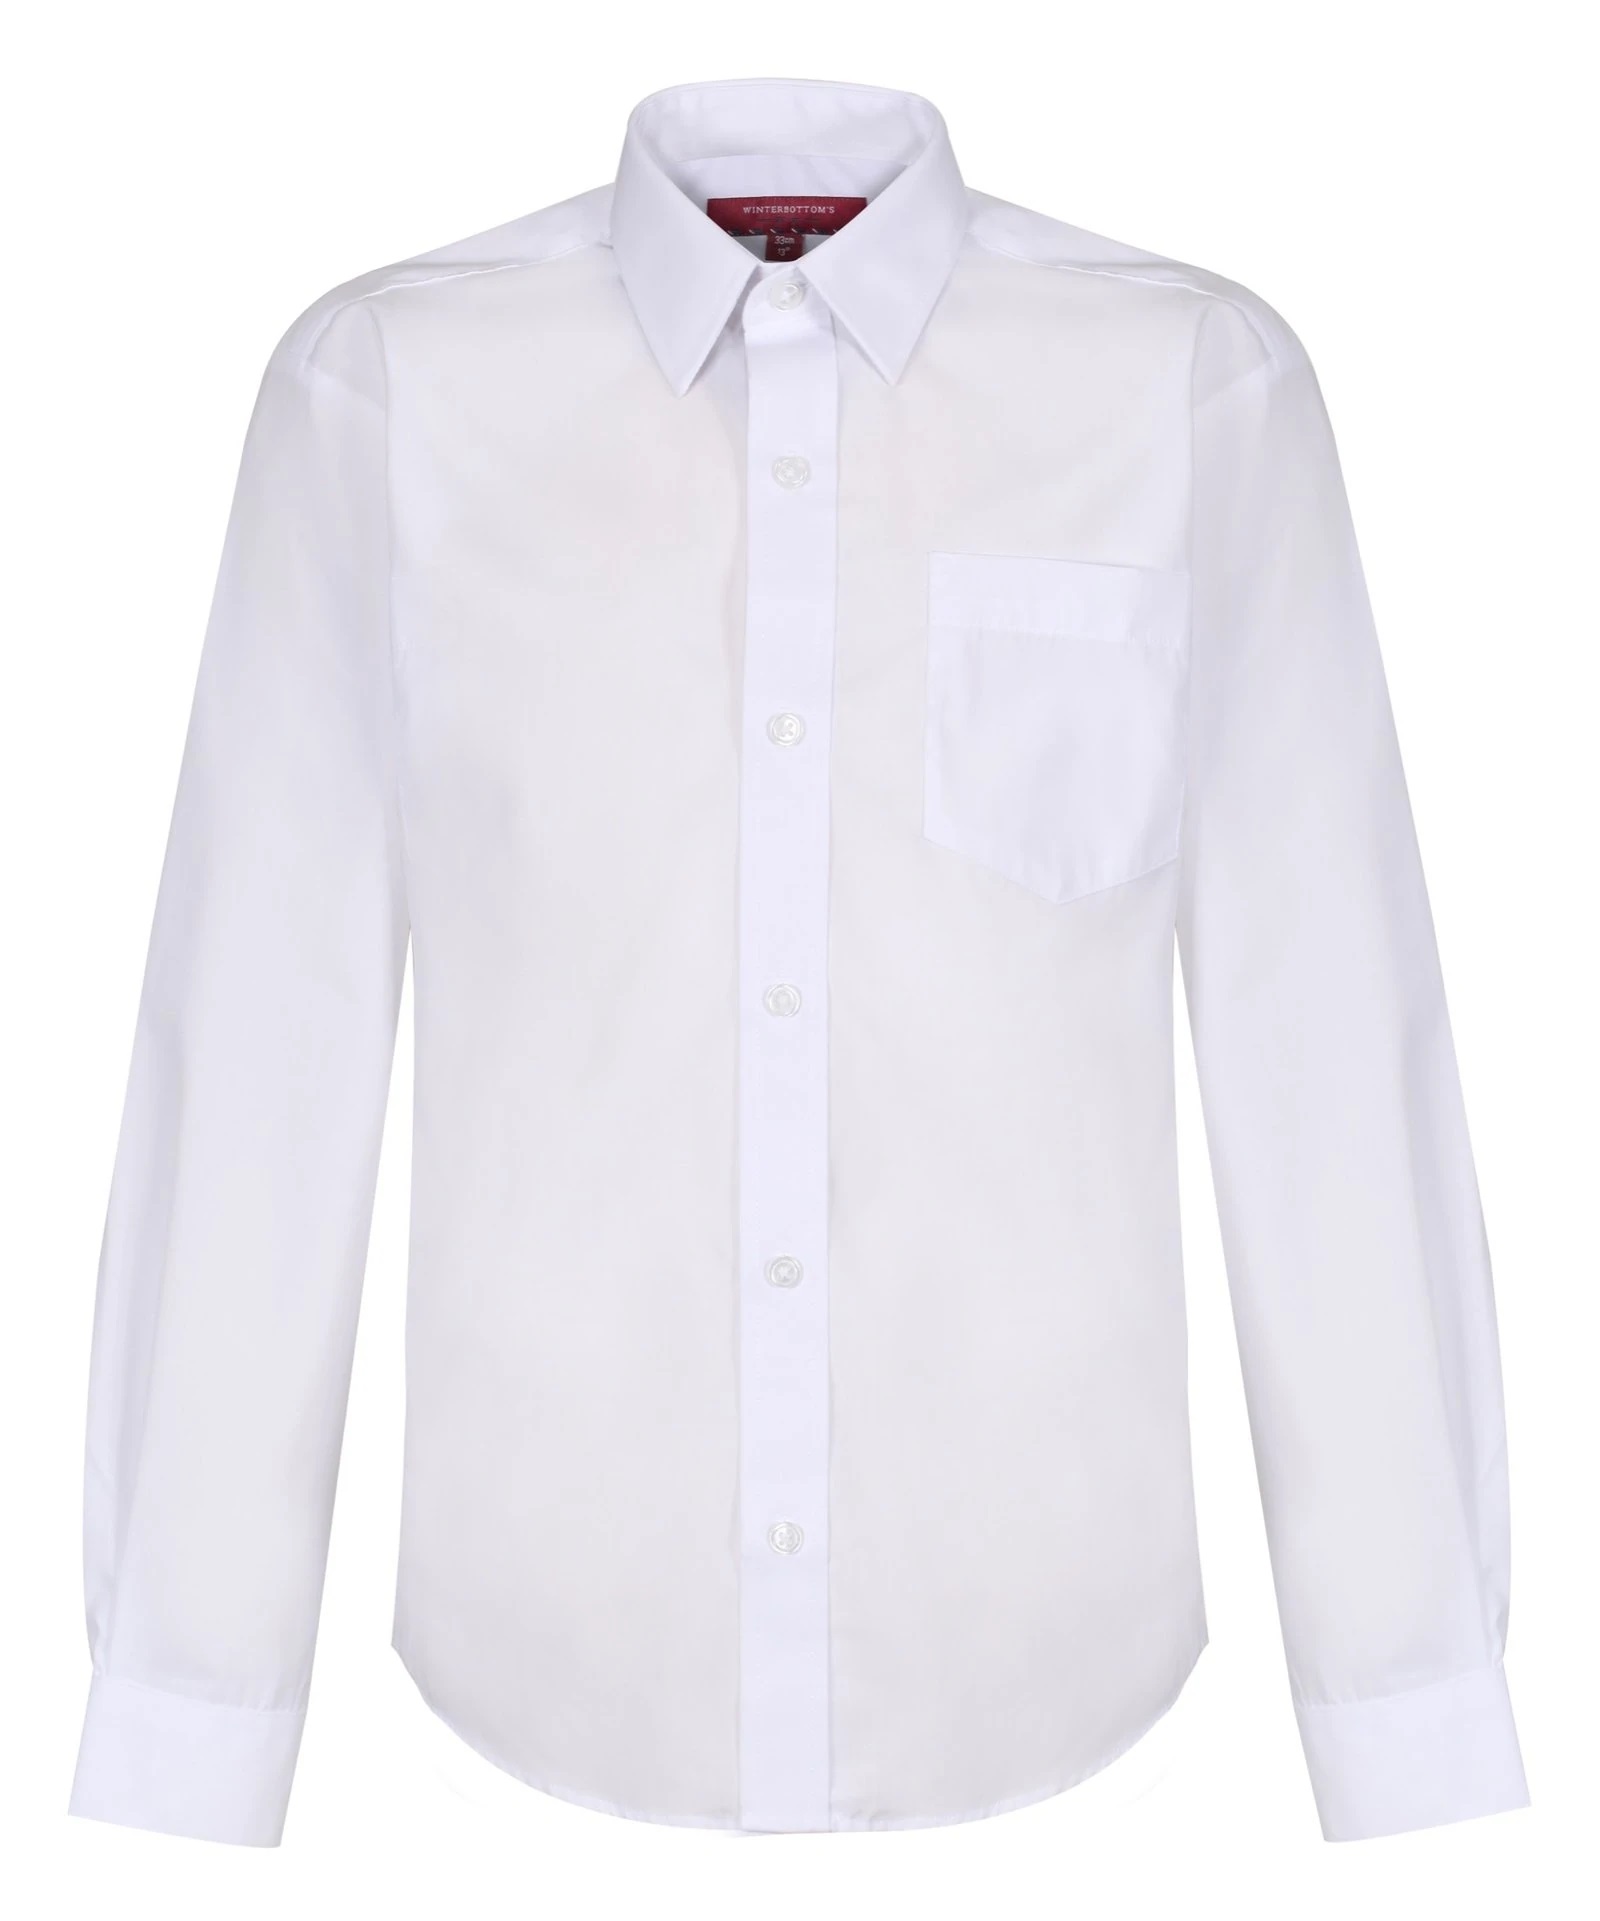 Webb Ellis - White School Shirt Long Sleeve – Twin Pack